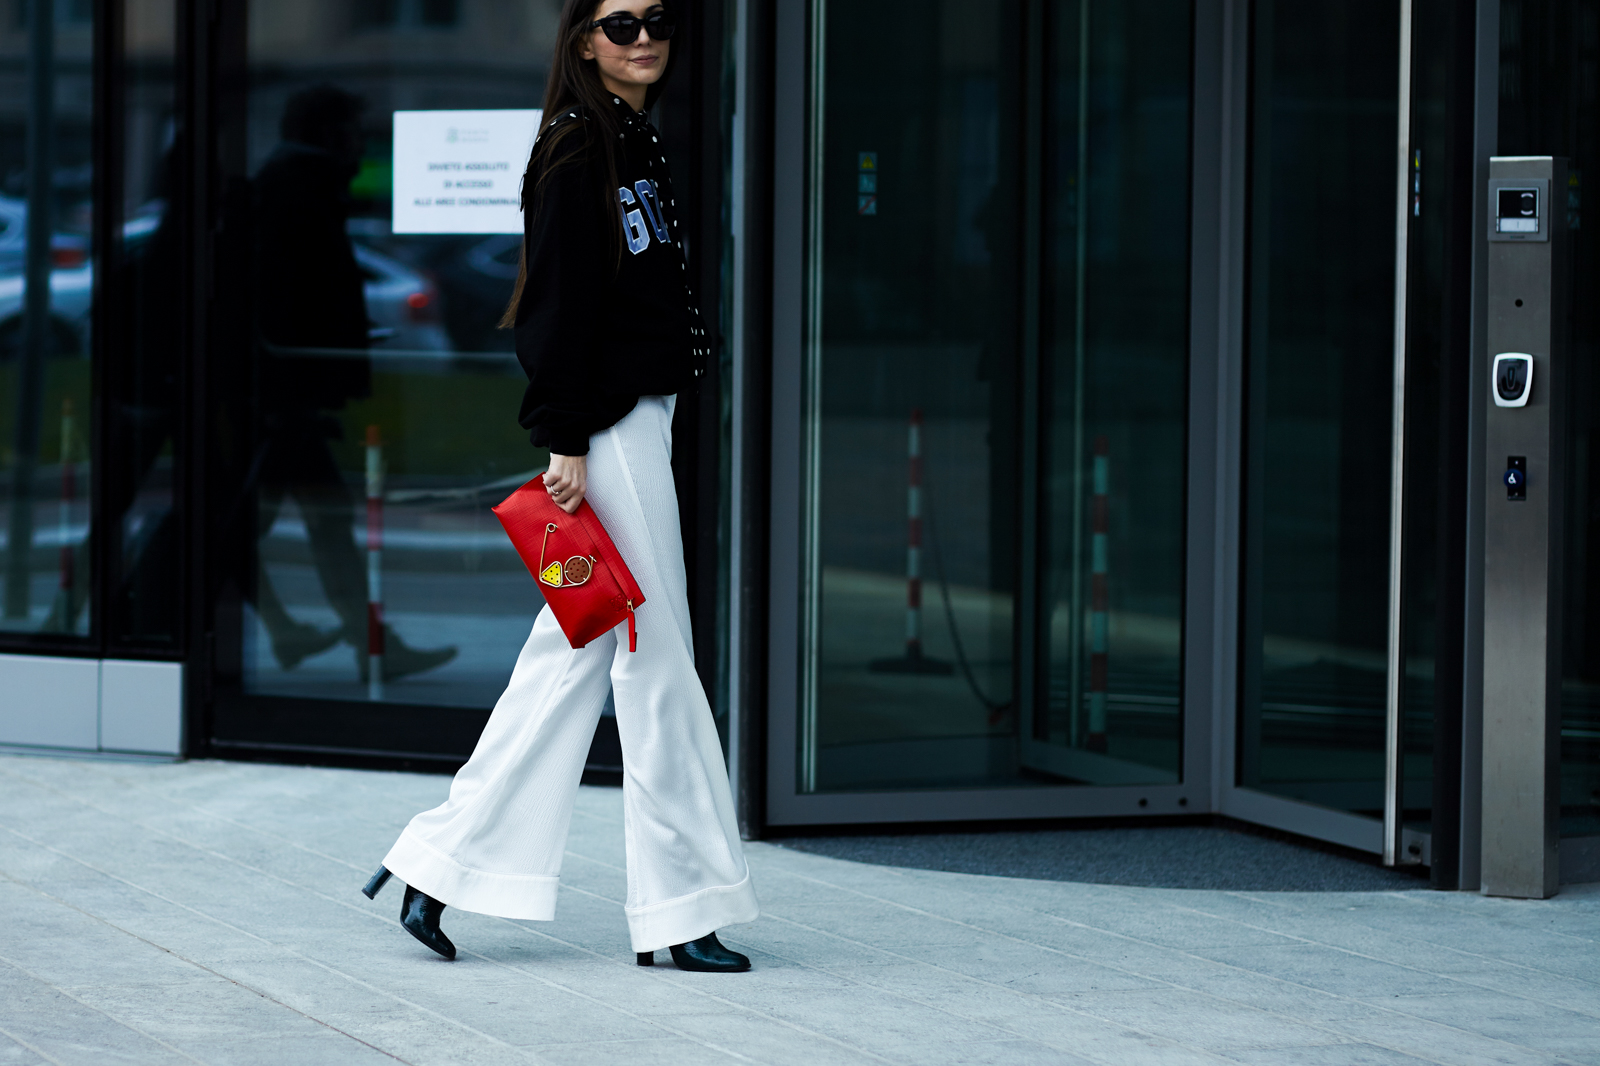 MFW Street Style: Italian stylist Diletta Bonaiuti wearing a black GCDS sweatshirt, polka dot scarf and red Loewe clutch bag after a fashion show in Milan